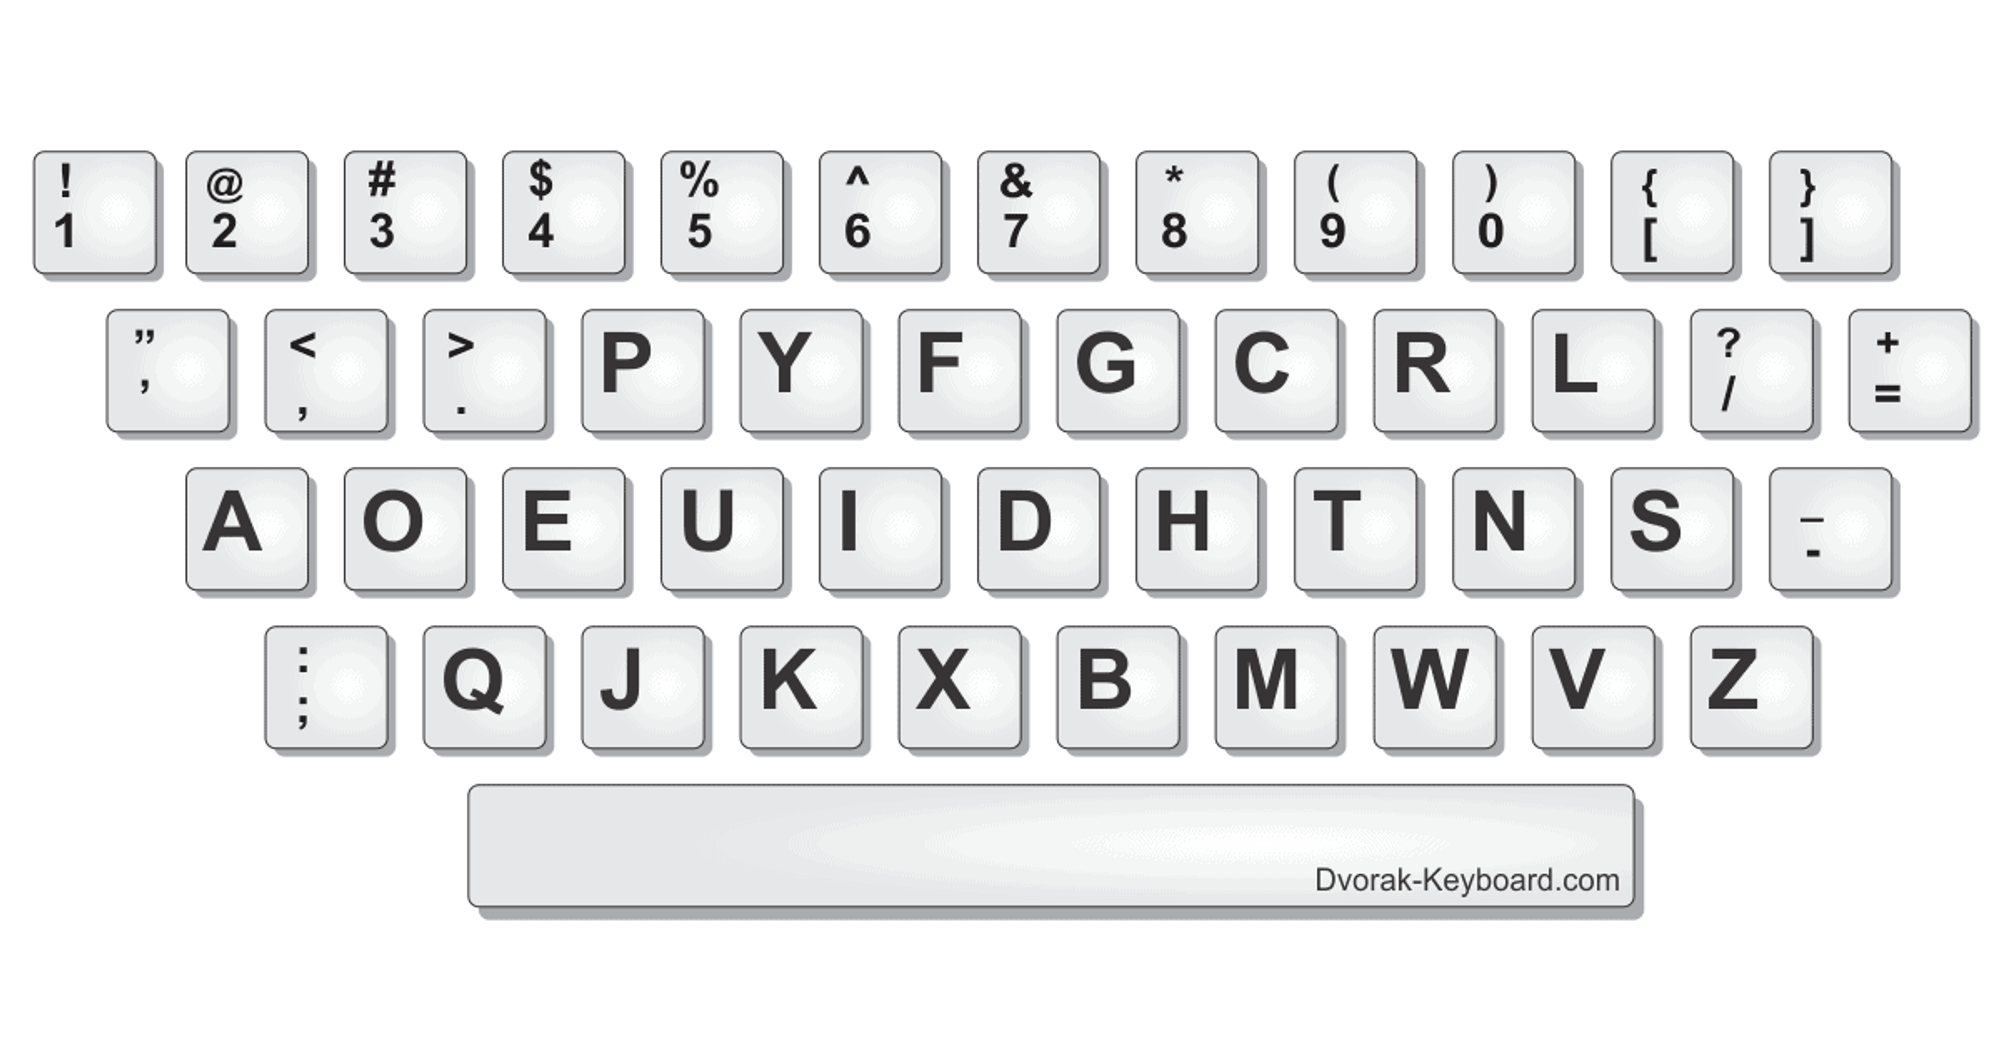 Dvorak Keyboard, my Experience